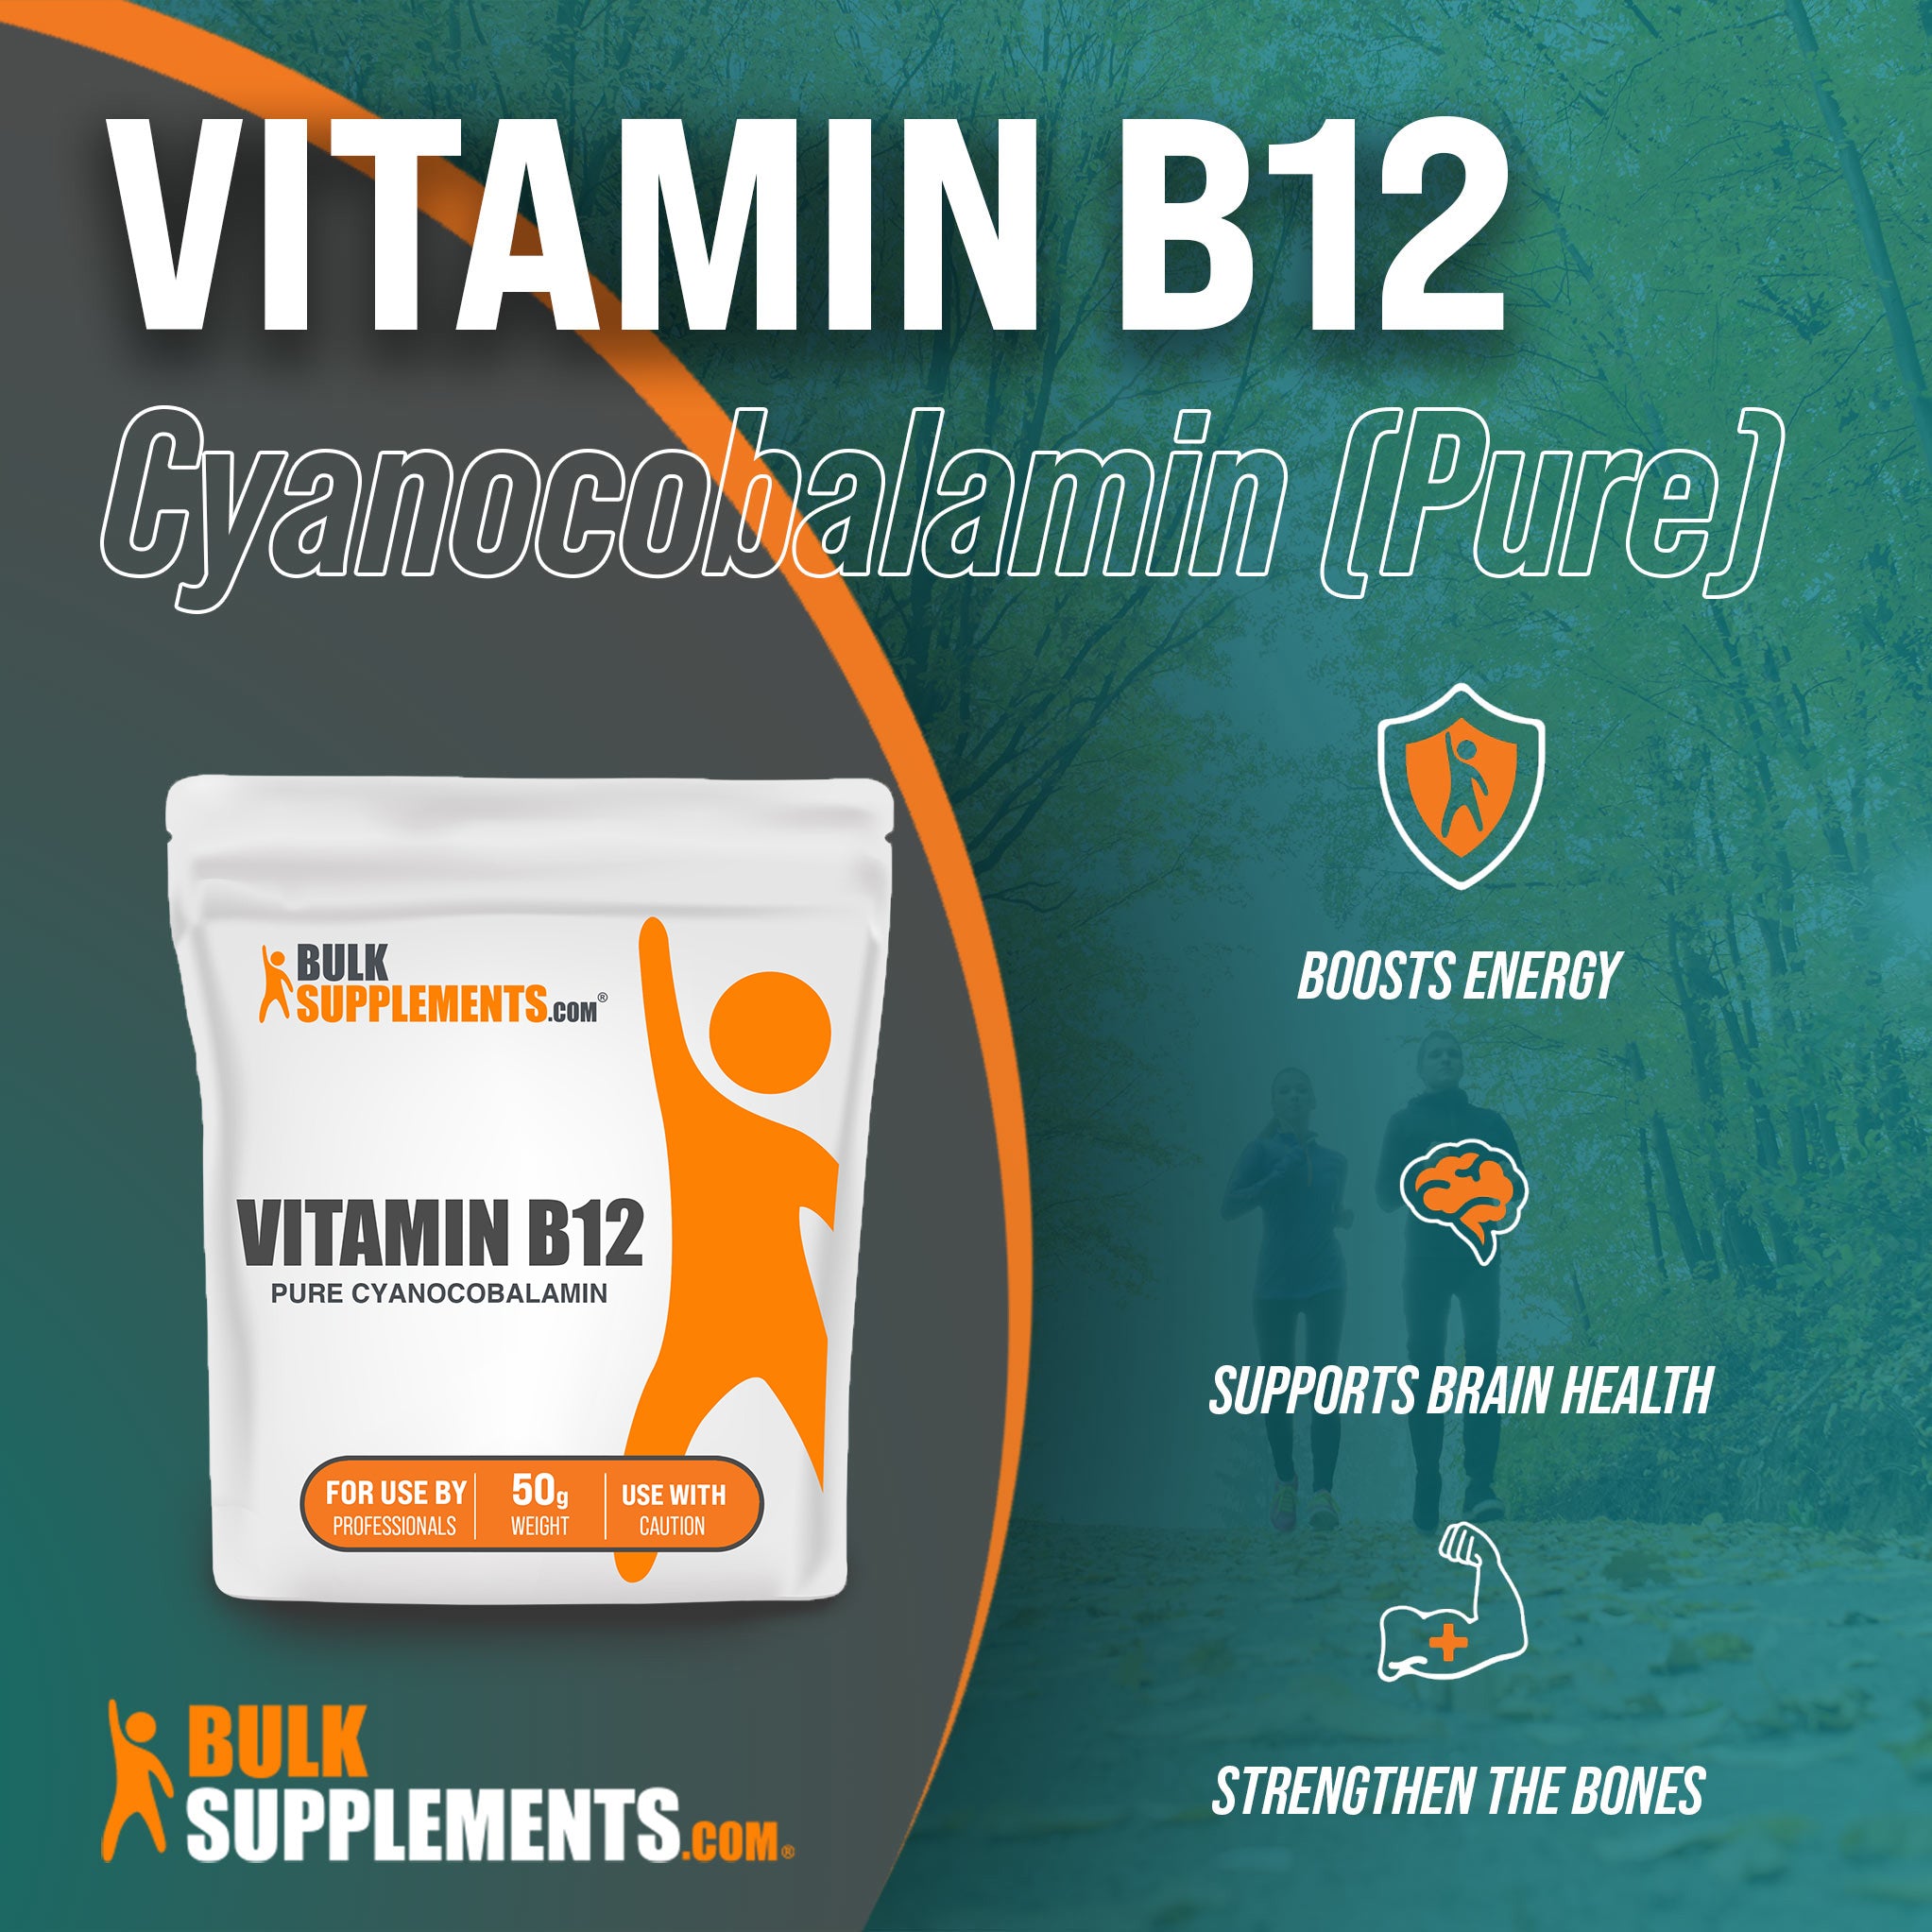 Benefits of Vitamin B12 Pure Cyanocobalamin: boosts energy, supports brain health, strengthen the bones